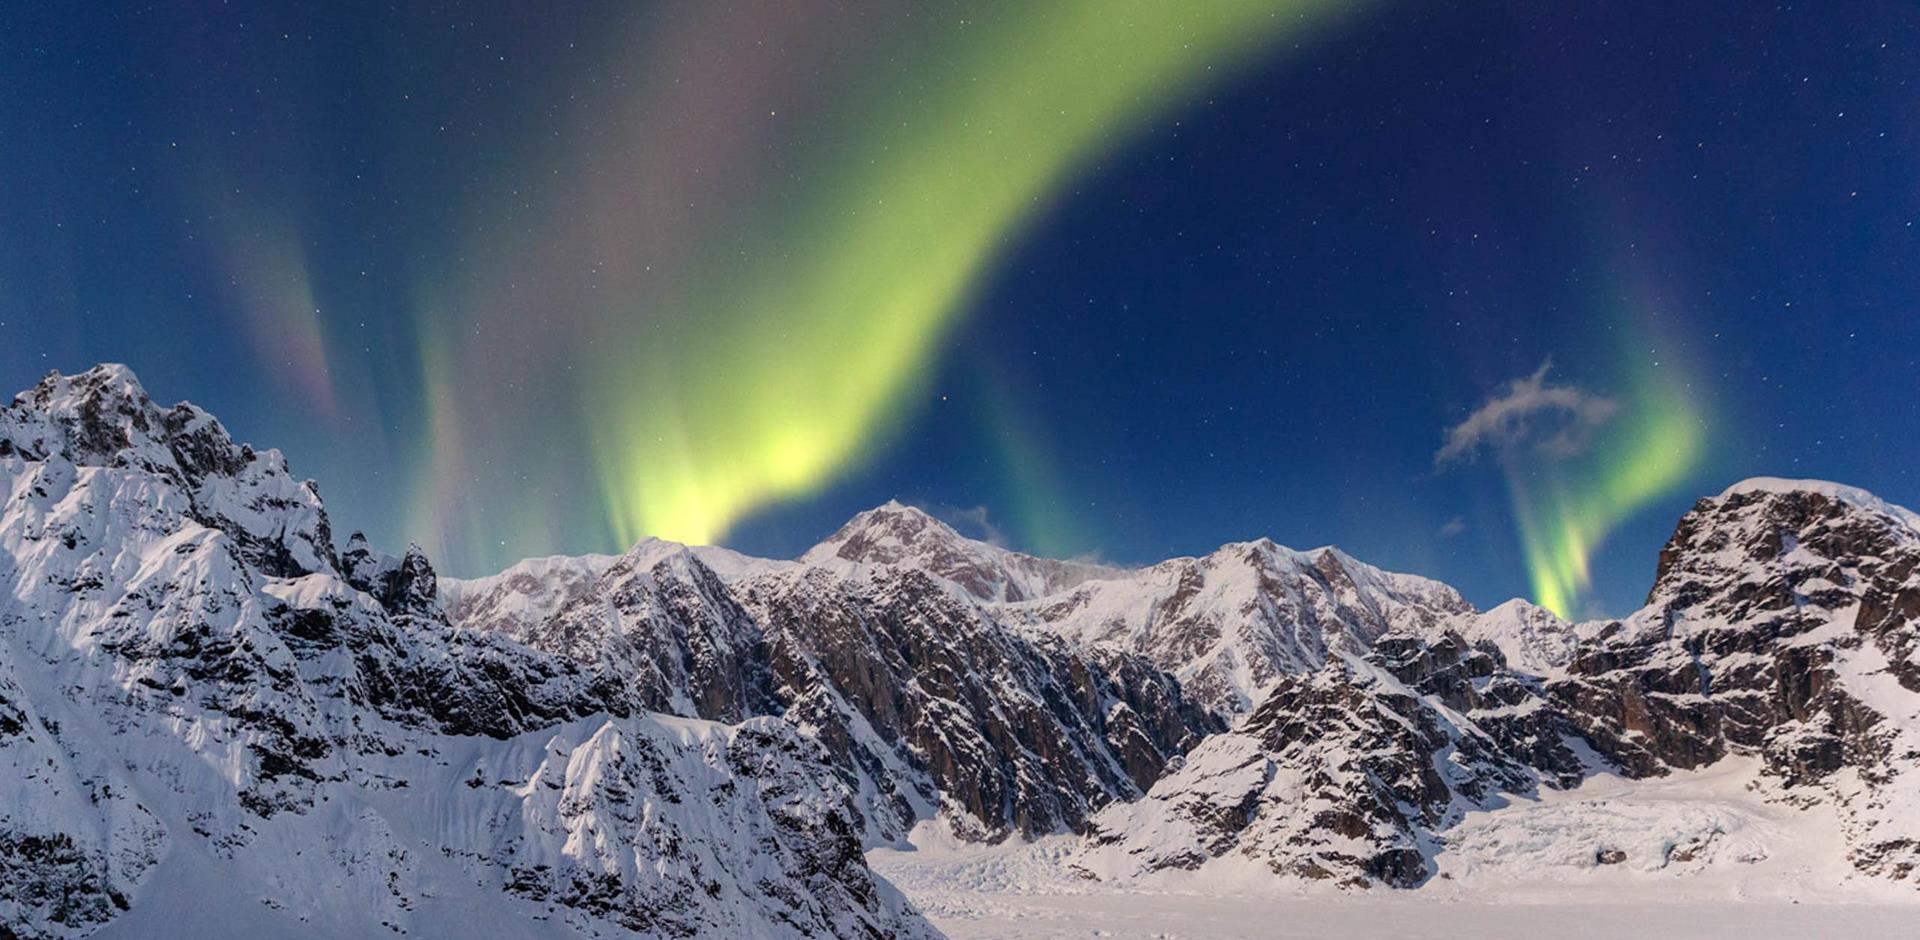 Rocky landscape and the northern lights (Aurora Borealis), Sheldon Chalet, Denali National Park, Alaska, USA